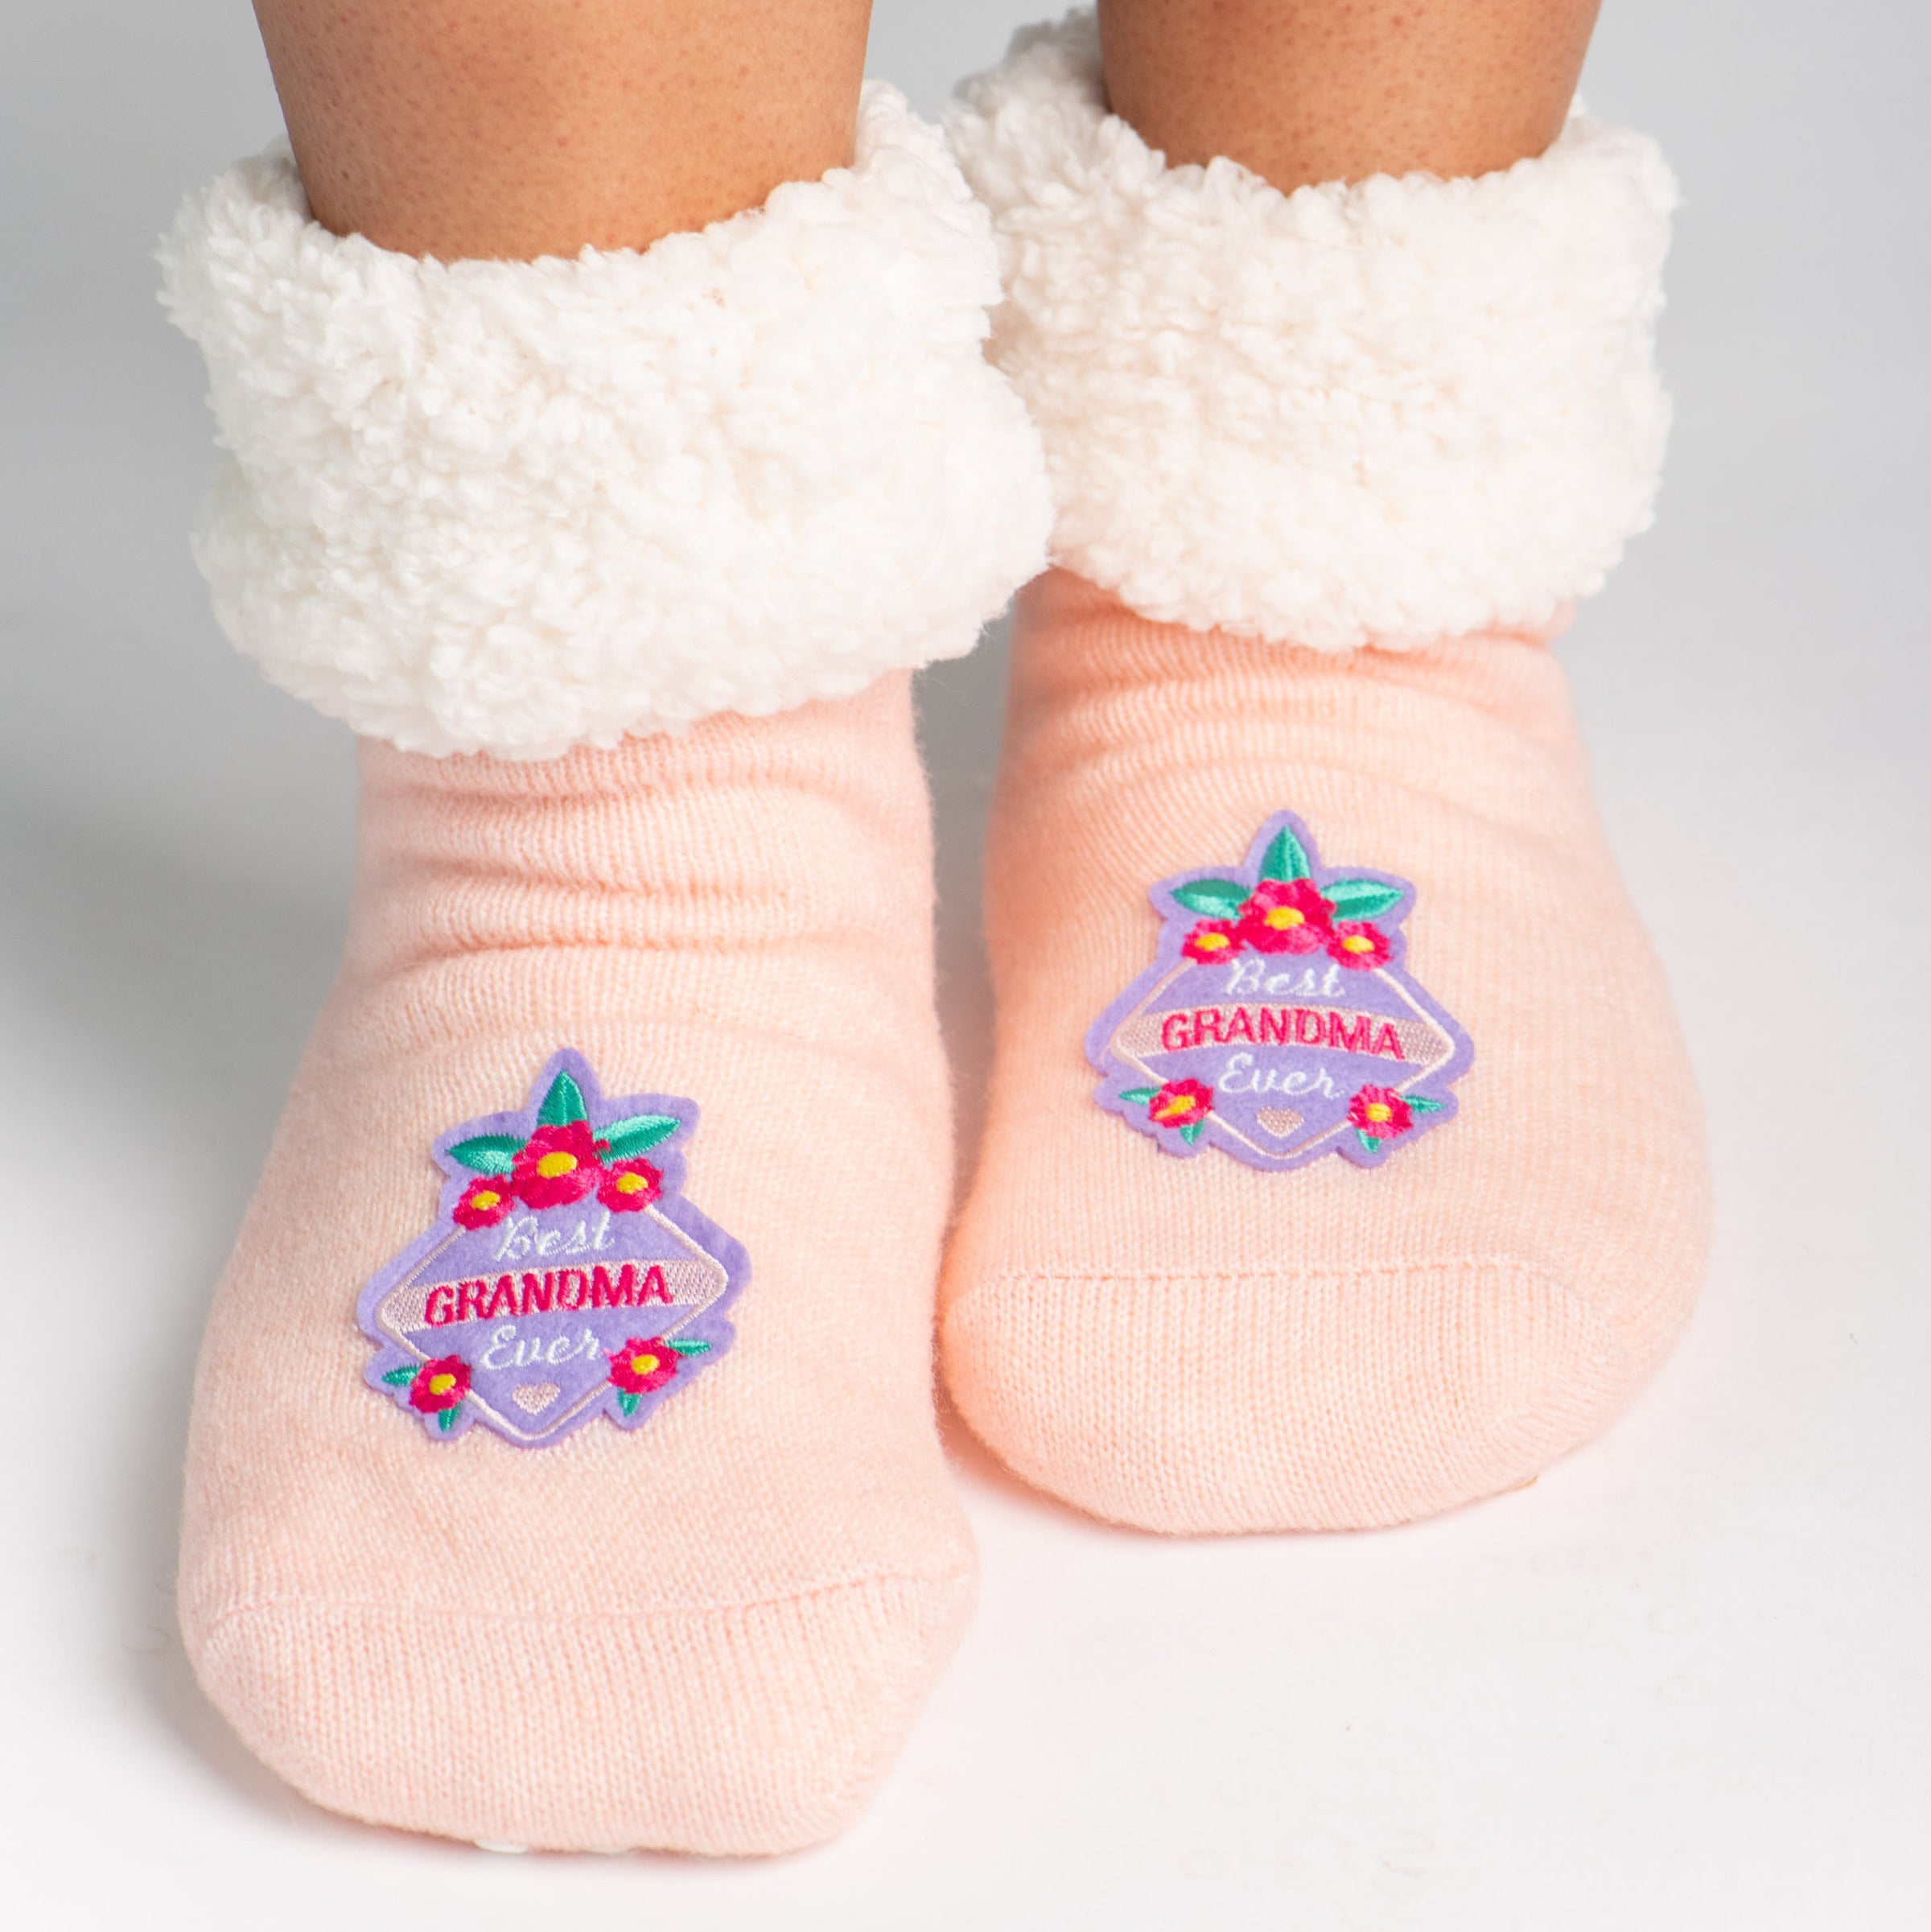 Best Grandma Ever - Original Size Pudus Slipper Socks    